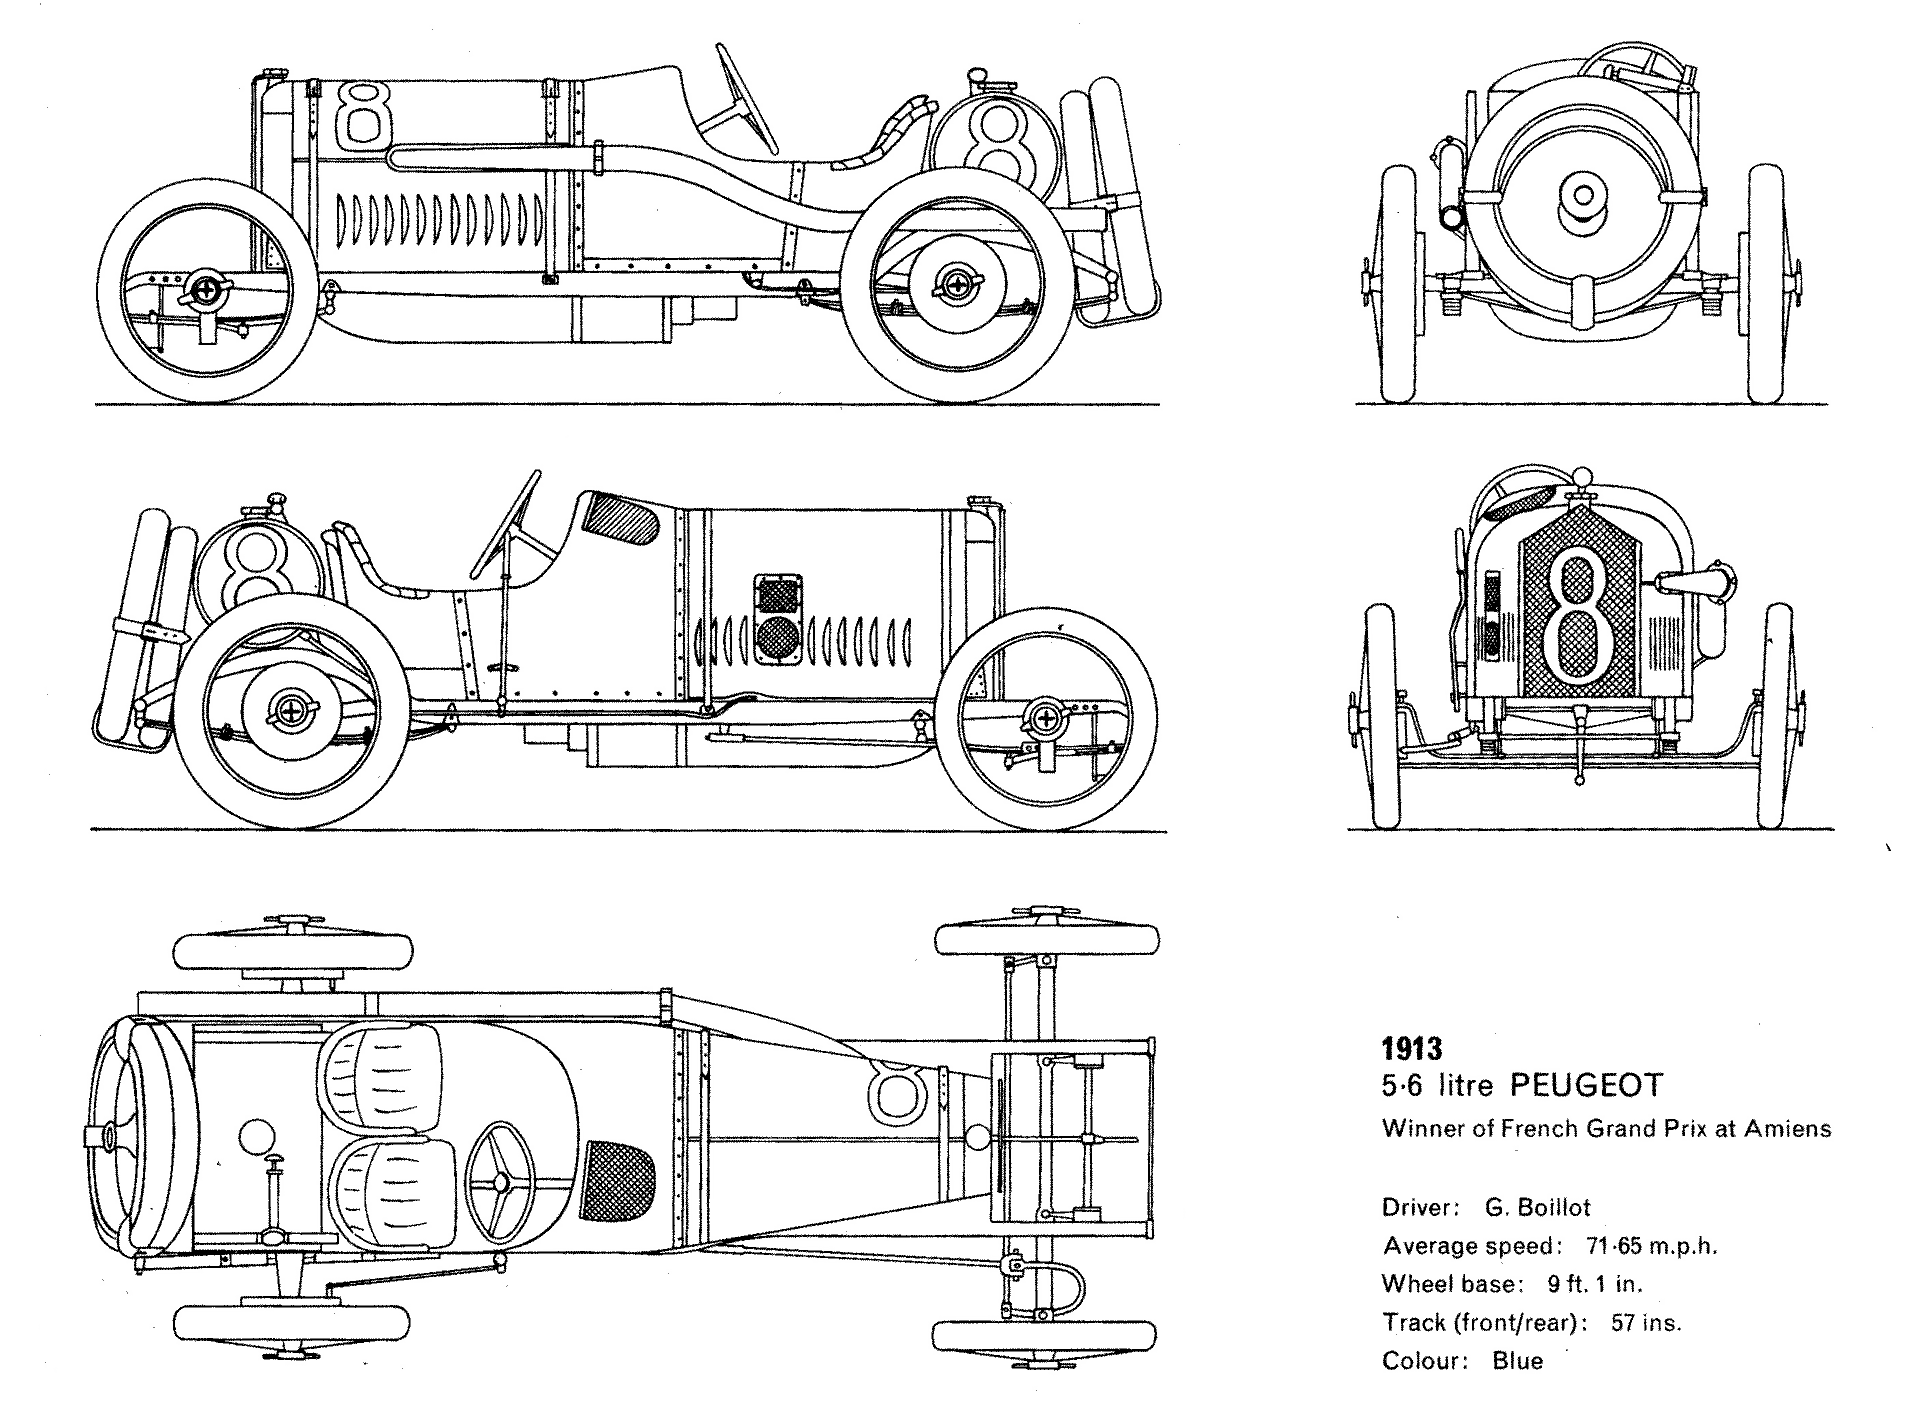 Peugeot GP blueprint